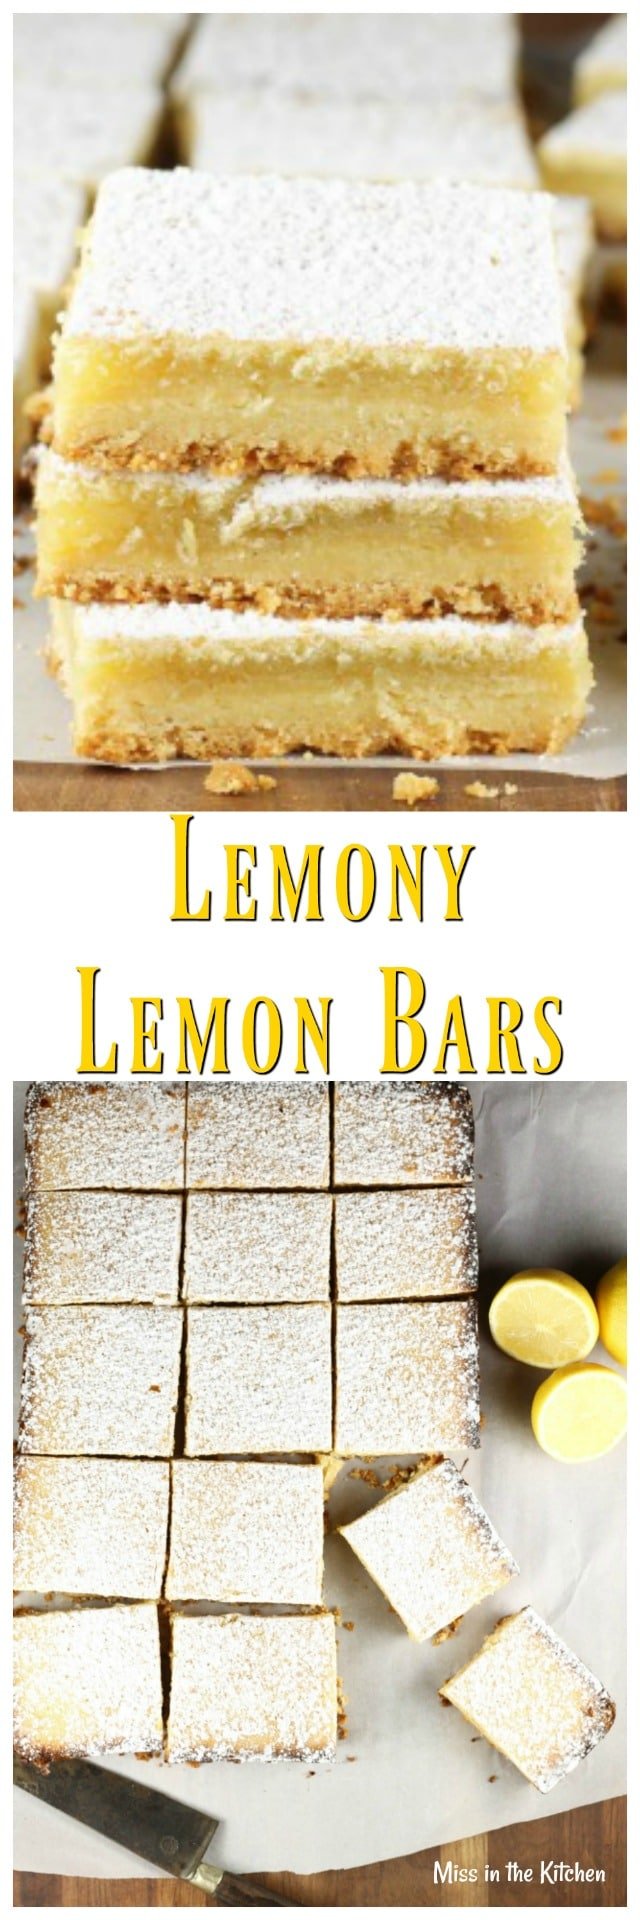 Recipe for Lemony Lemon Bars from The Easy Homemade Cookie Cookbook ~ MissintheKitchen.com